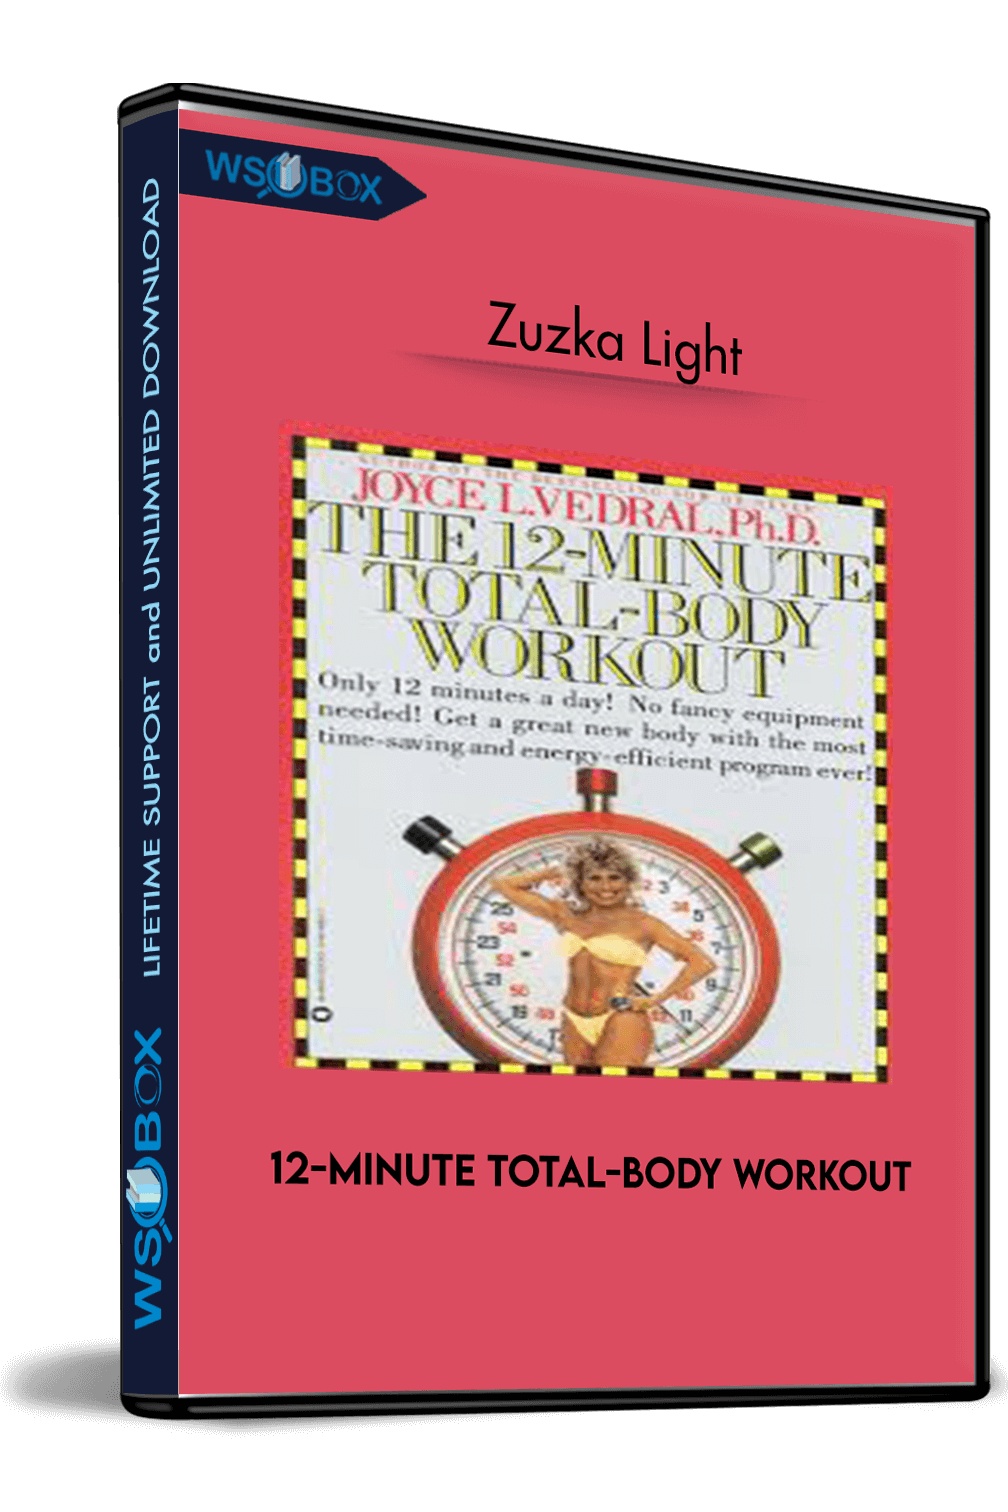 12-minute-total-body-workout-zuzka-light